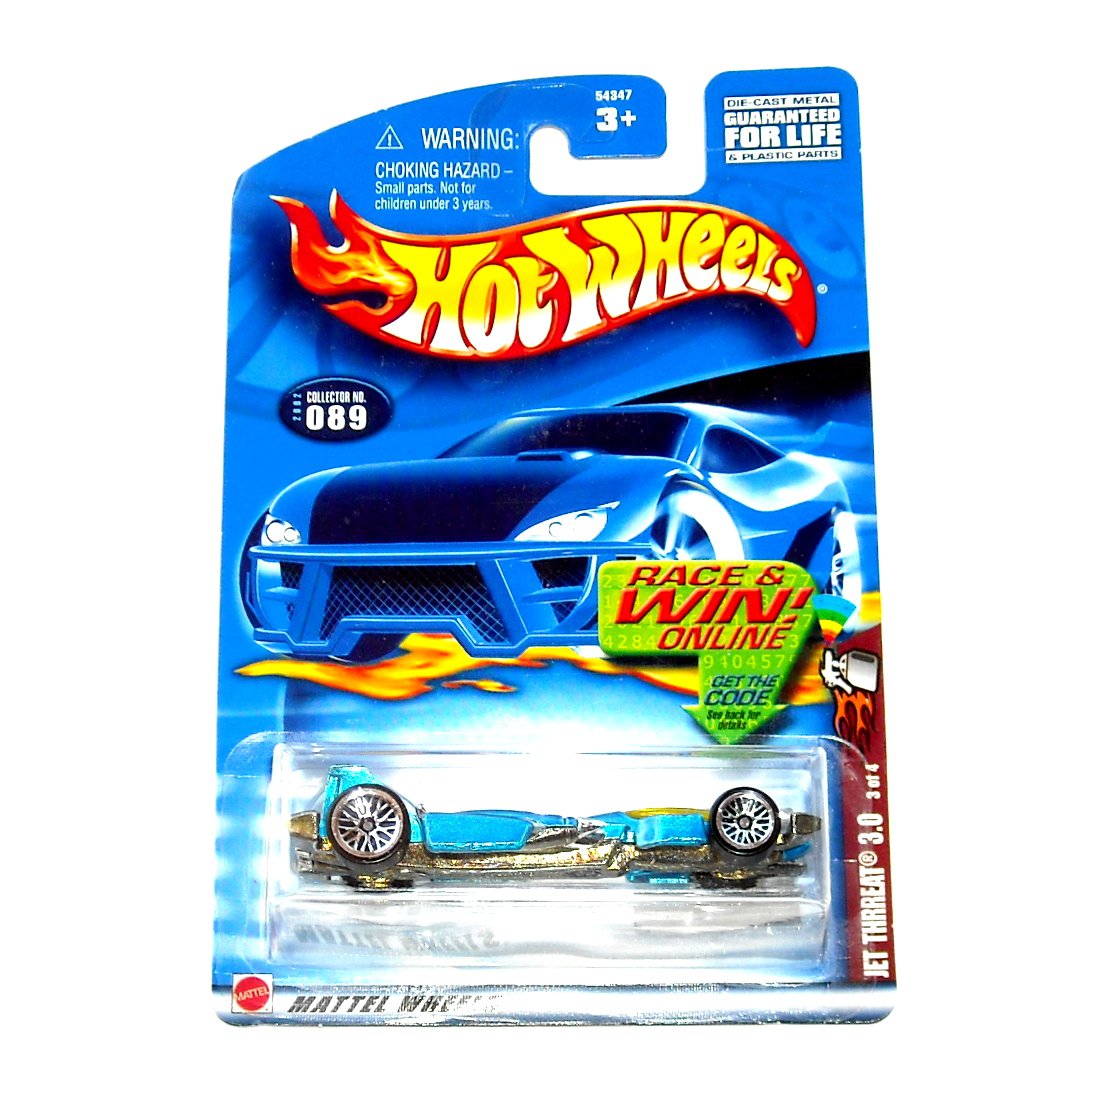 Jet Thrreat Blue Mattel Hot Wheels Collector No 089 2001